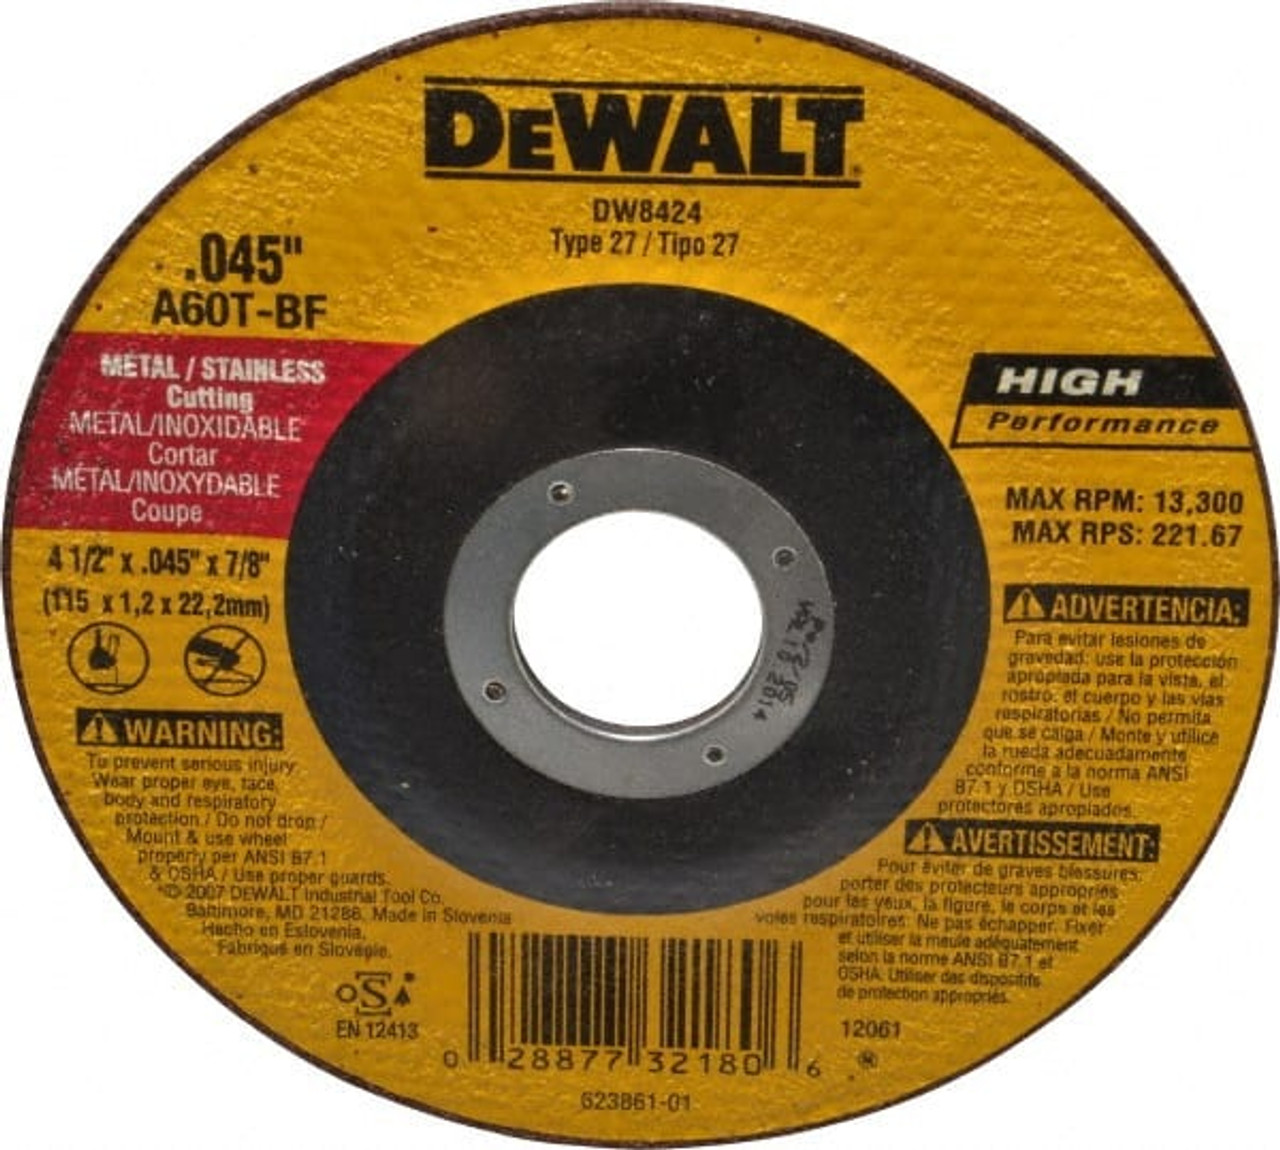 DeWALT 60 Grit, 4-1/2" Wheel Diam, 7/8" Arbor Hole, Type 27 Depressed  Center Wheel Aluminum Oxide, T Hardness, 13,300 Max RPM, Compatible with  Angle Grinder DW8424 - 08701997 - Penn Tool Co., Inc